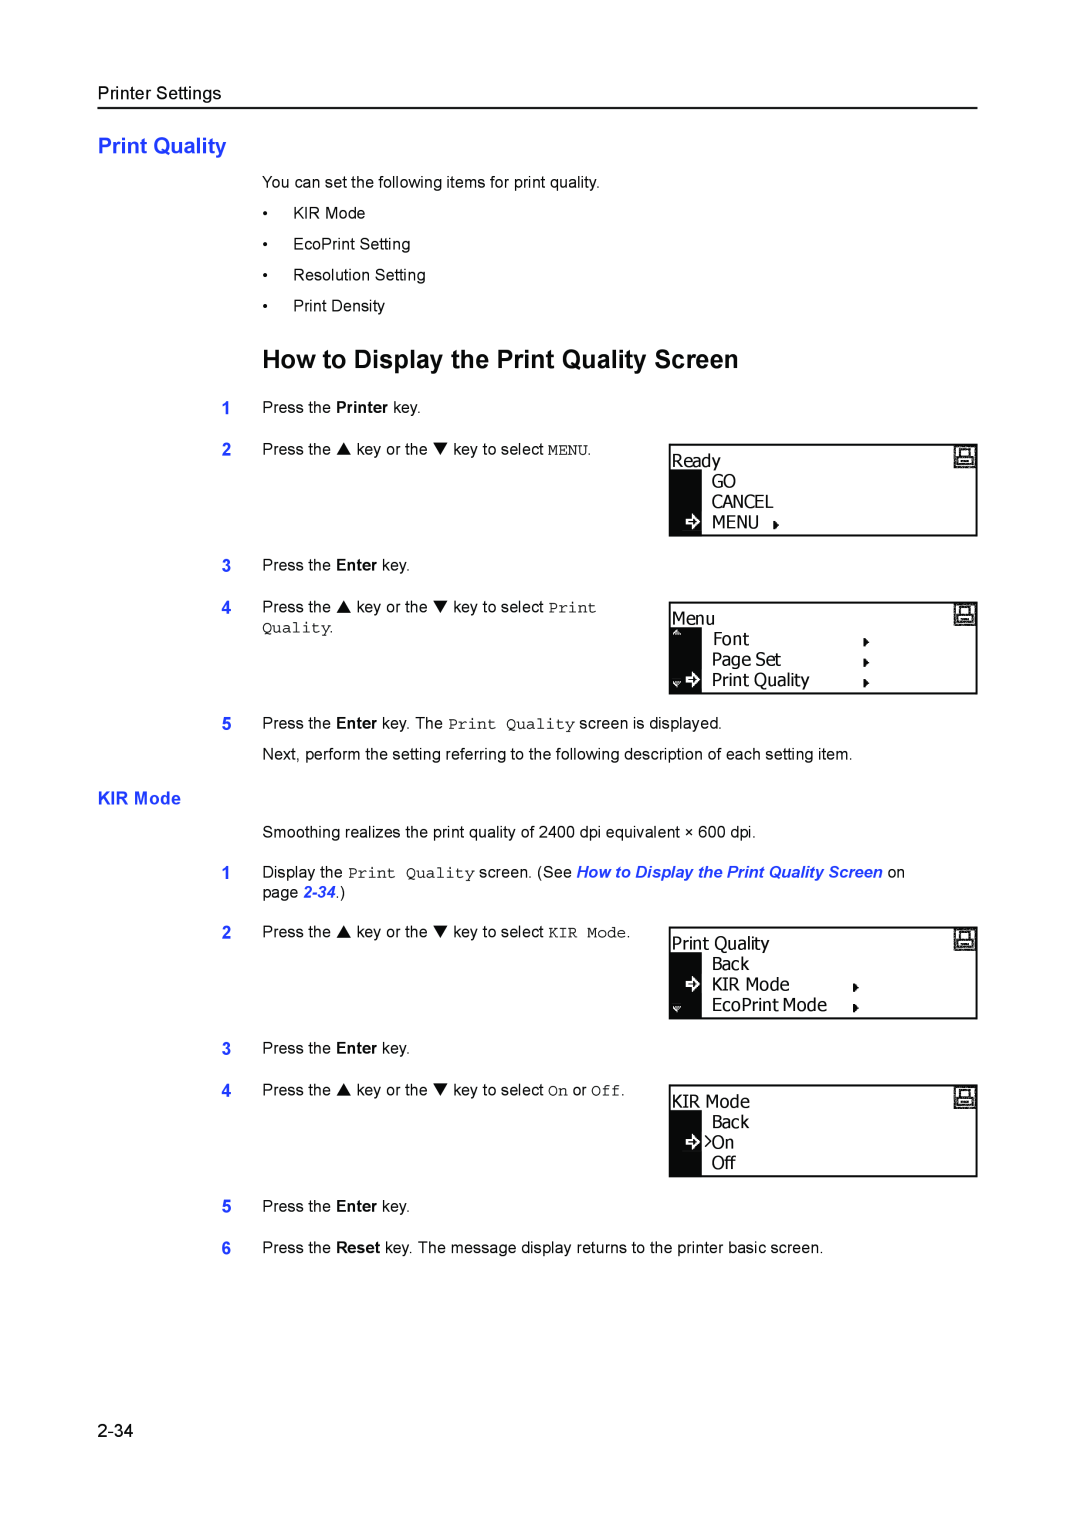 Kyocera 2550, 2050, 1650 manual How to Display the Print Quality Screen, KIR Mode, 2-34, Printer Settings 